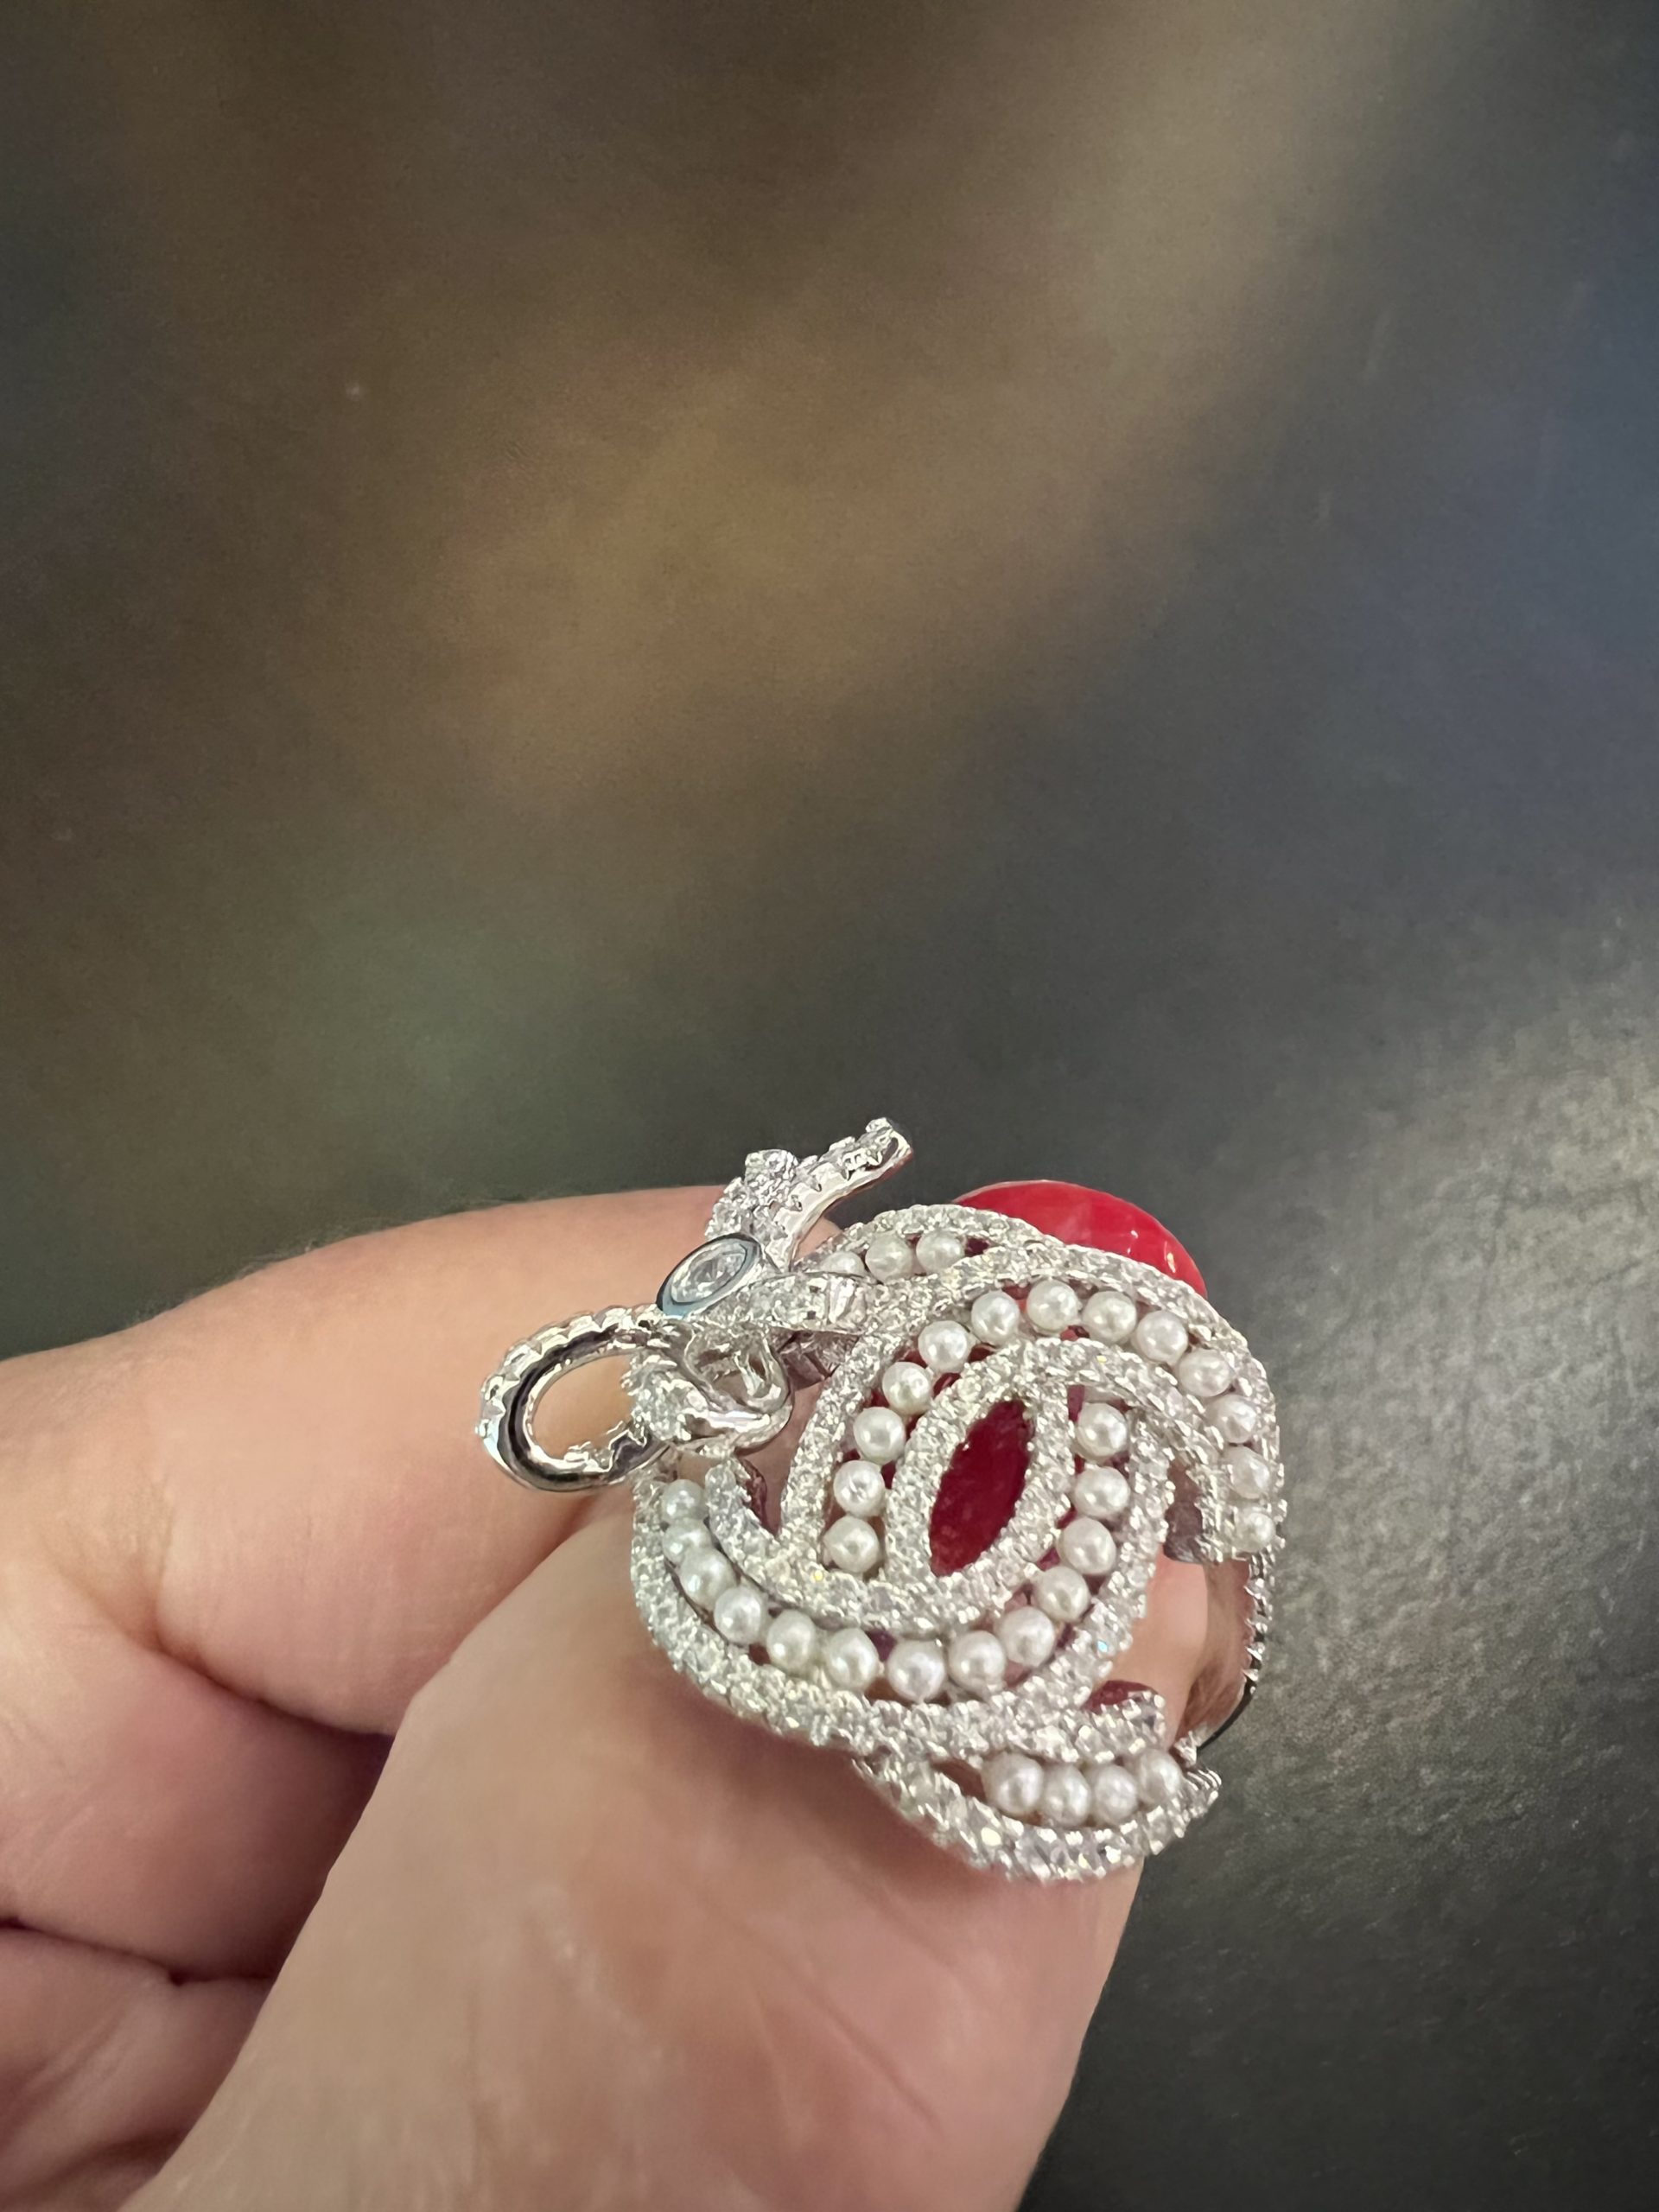 Interlocking C Sterling Ring CZ Pearls